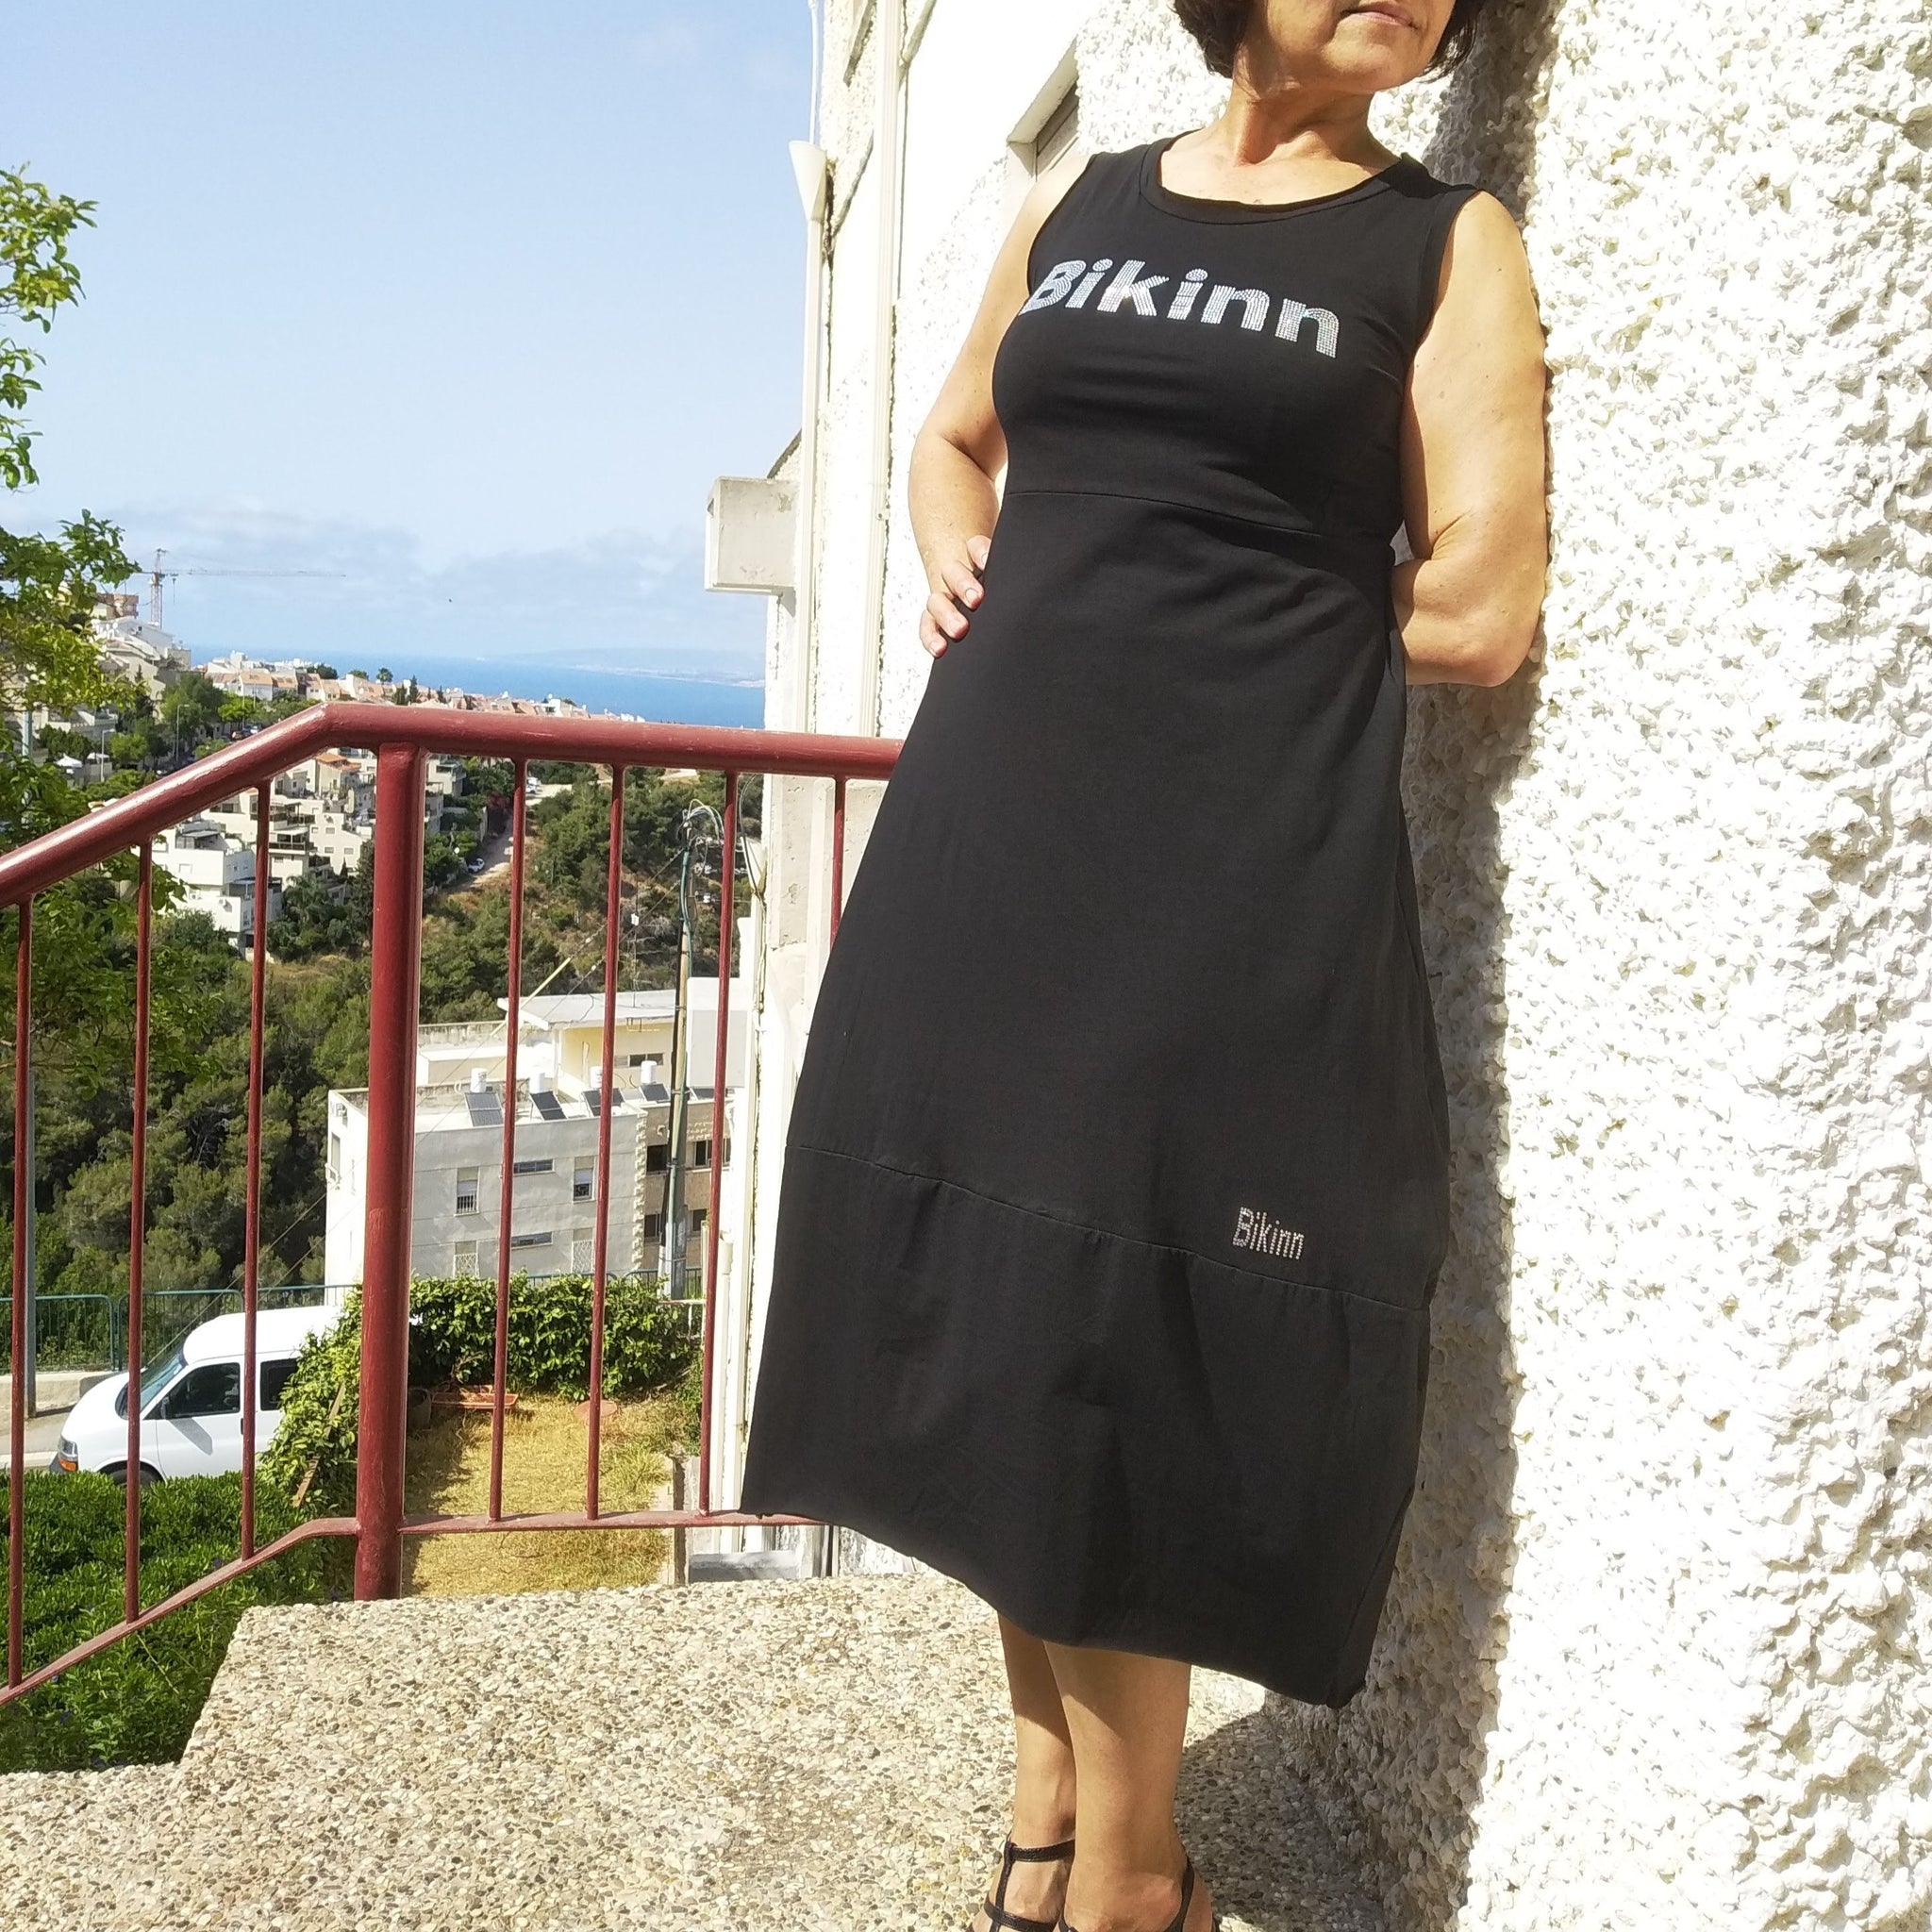 women standing outside wearing black sleeveless summer dress, Rhinestone hotfix print of Bikinn as front embellishment, Bling-bling fashion. bikinn.com